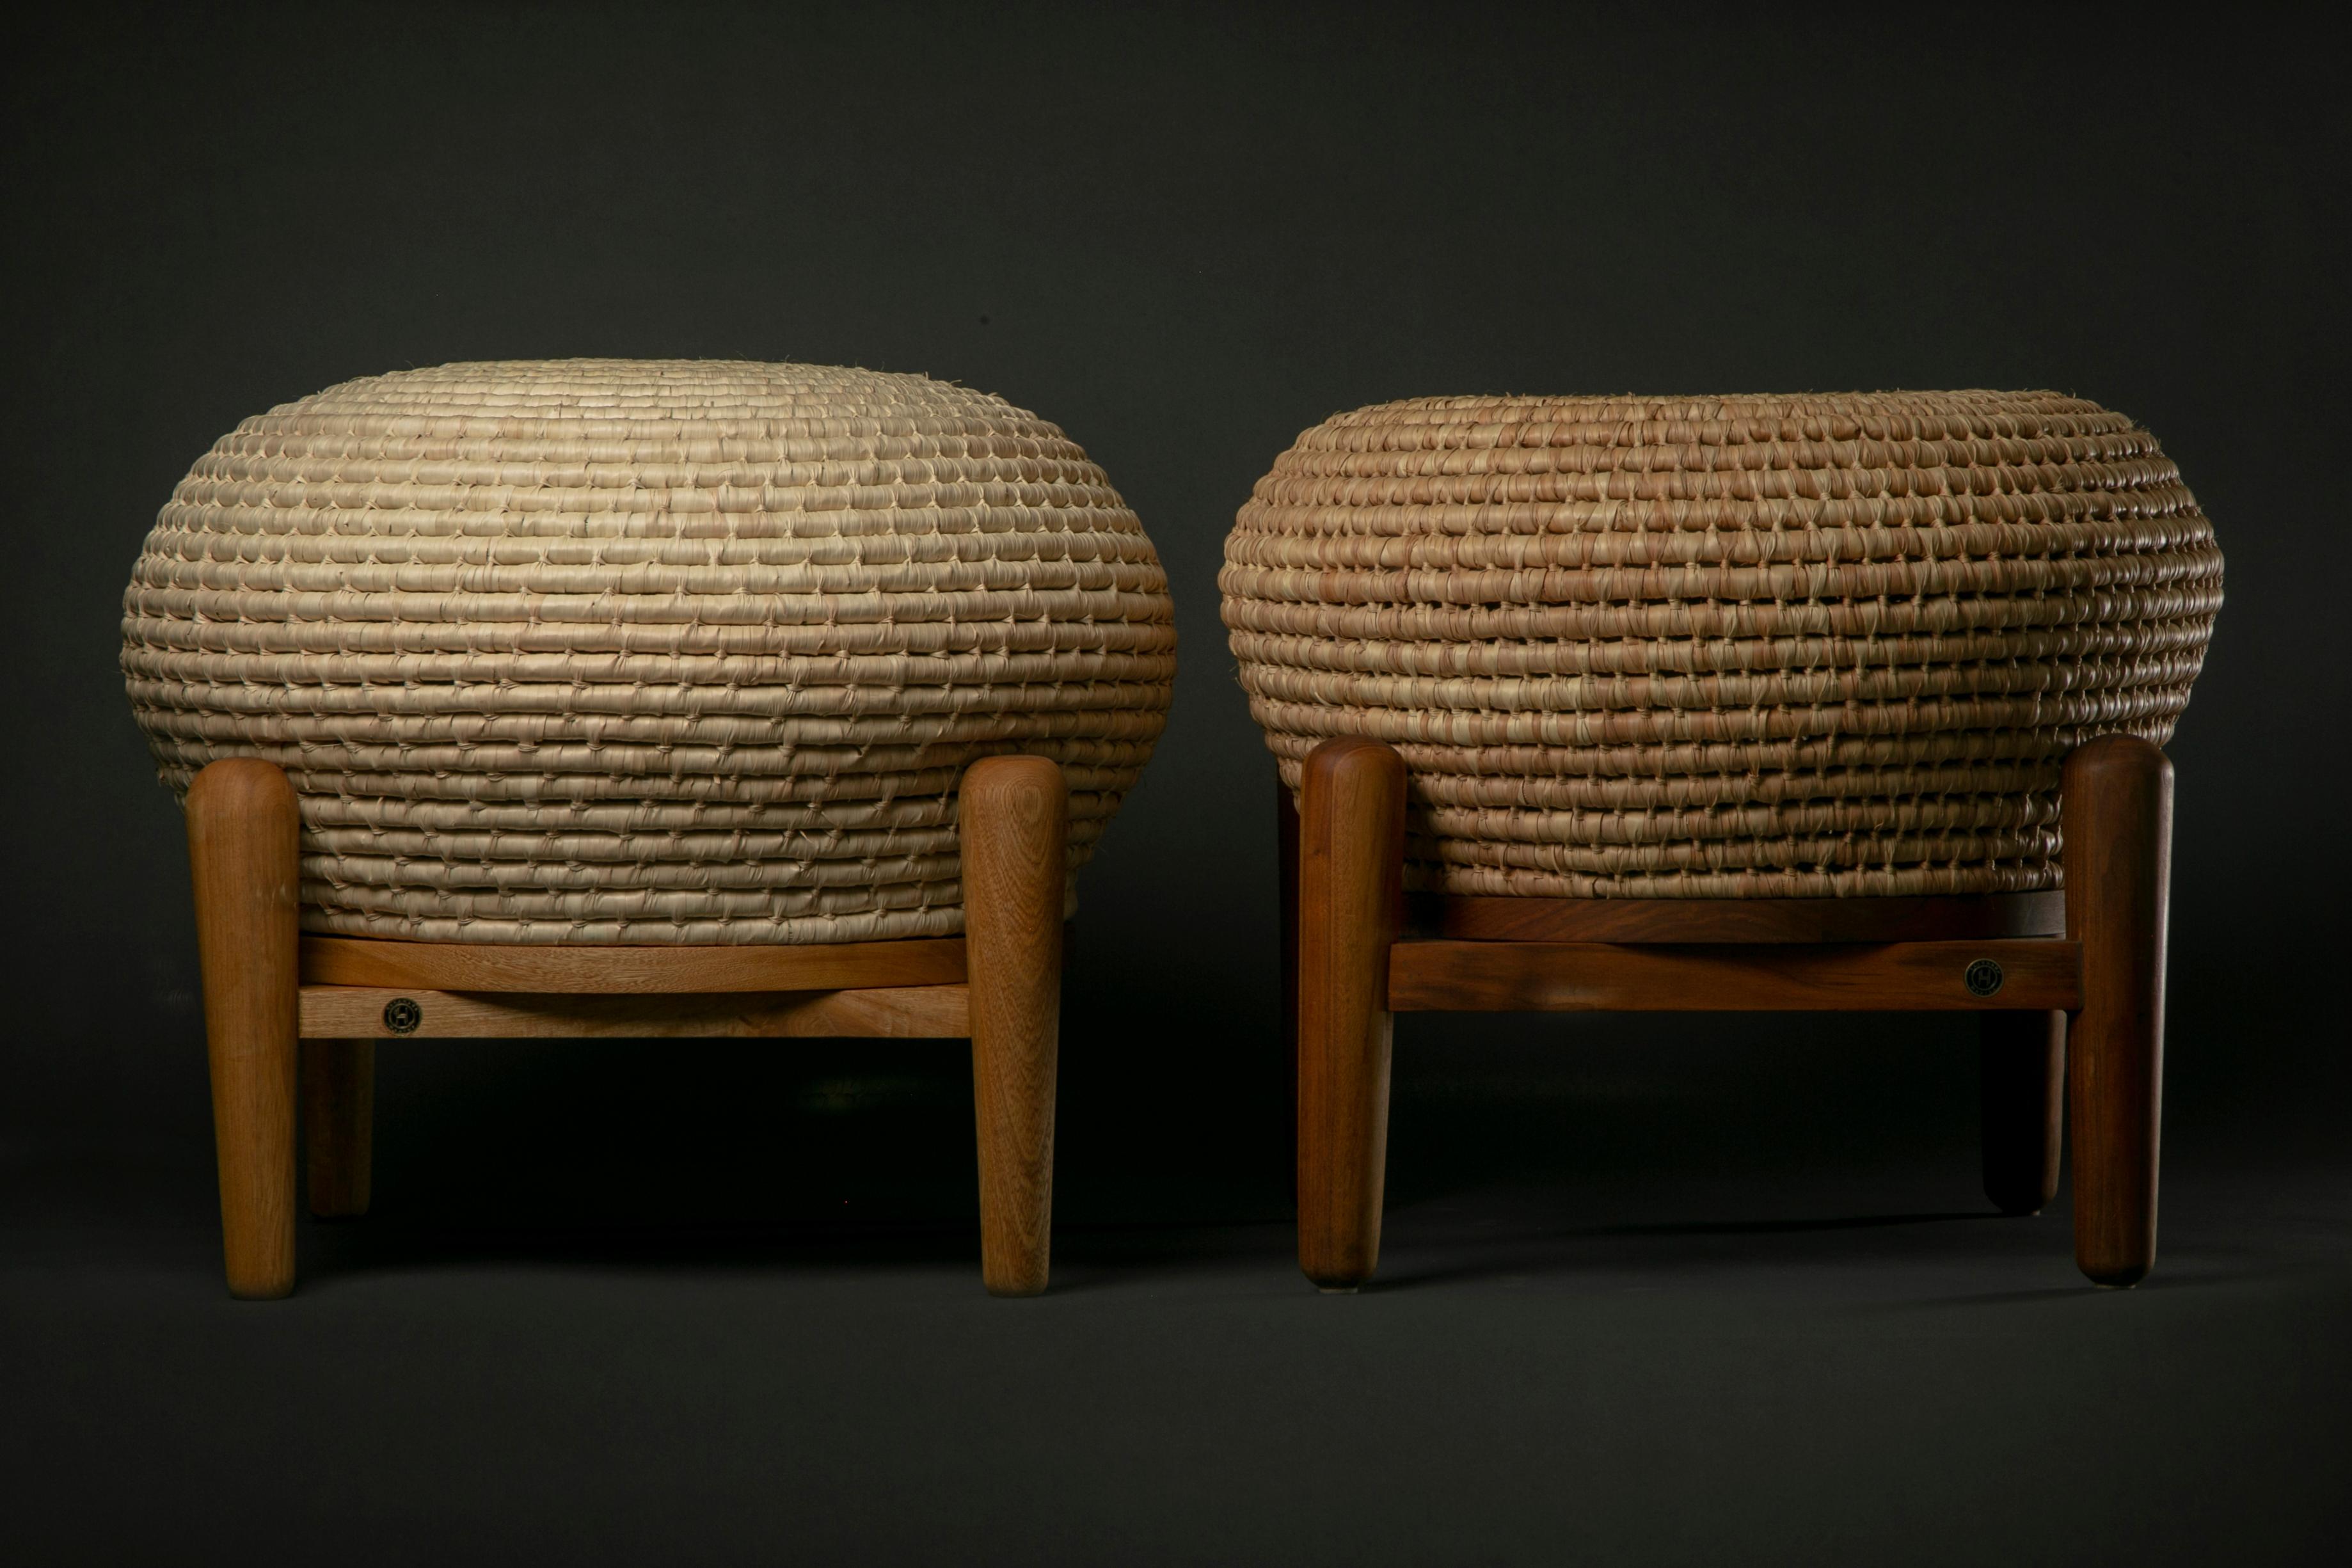 Hand Knit Palm stools with Tzalam or Rosa Morada Hardwood